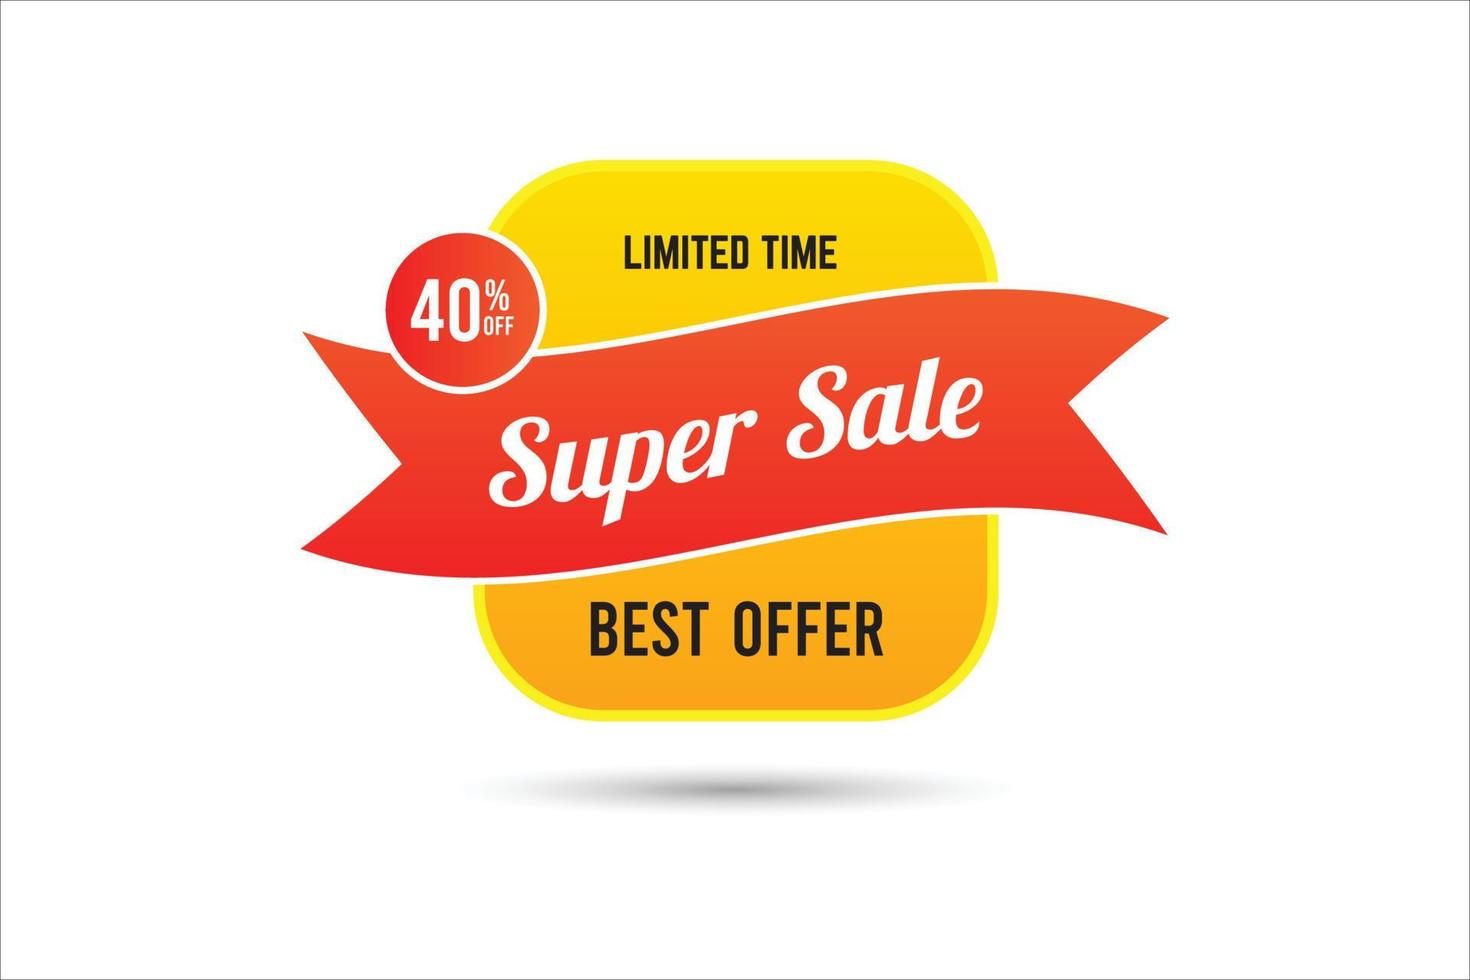 Super sale limited time only vector illustration